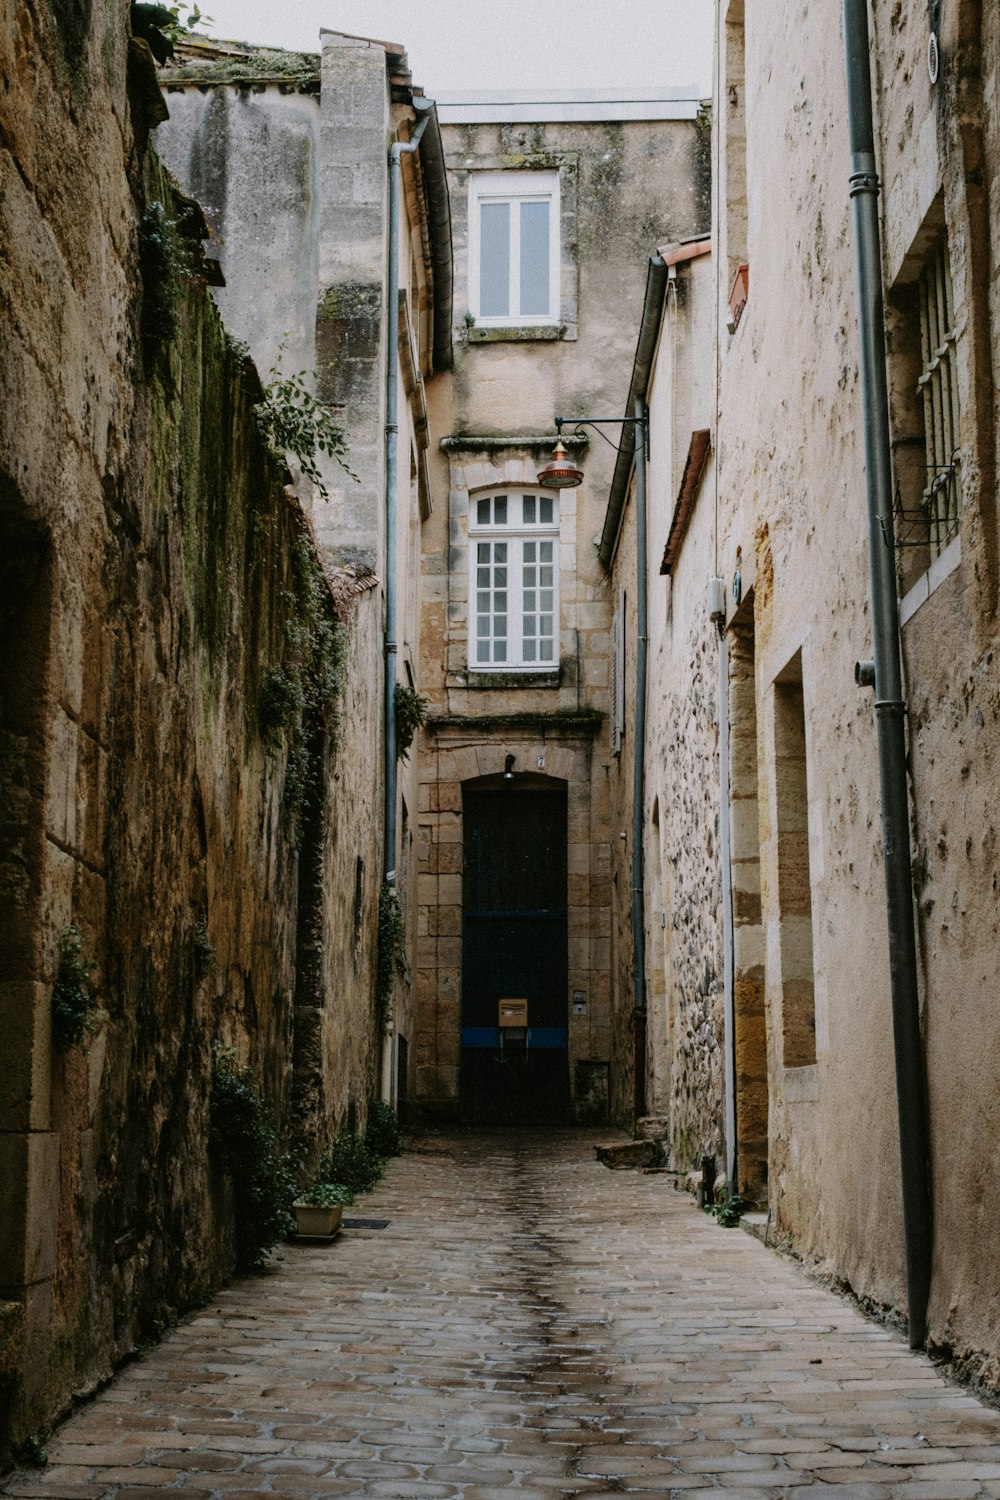 a narrow alley way with a blue door